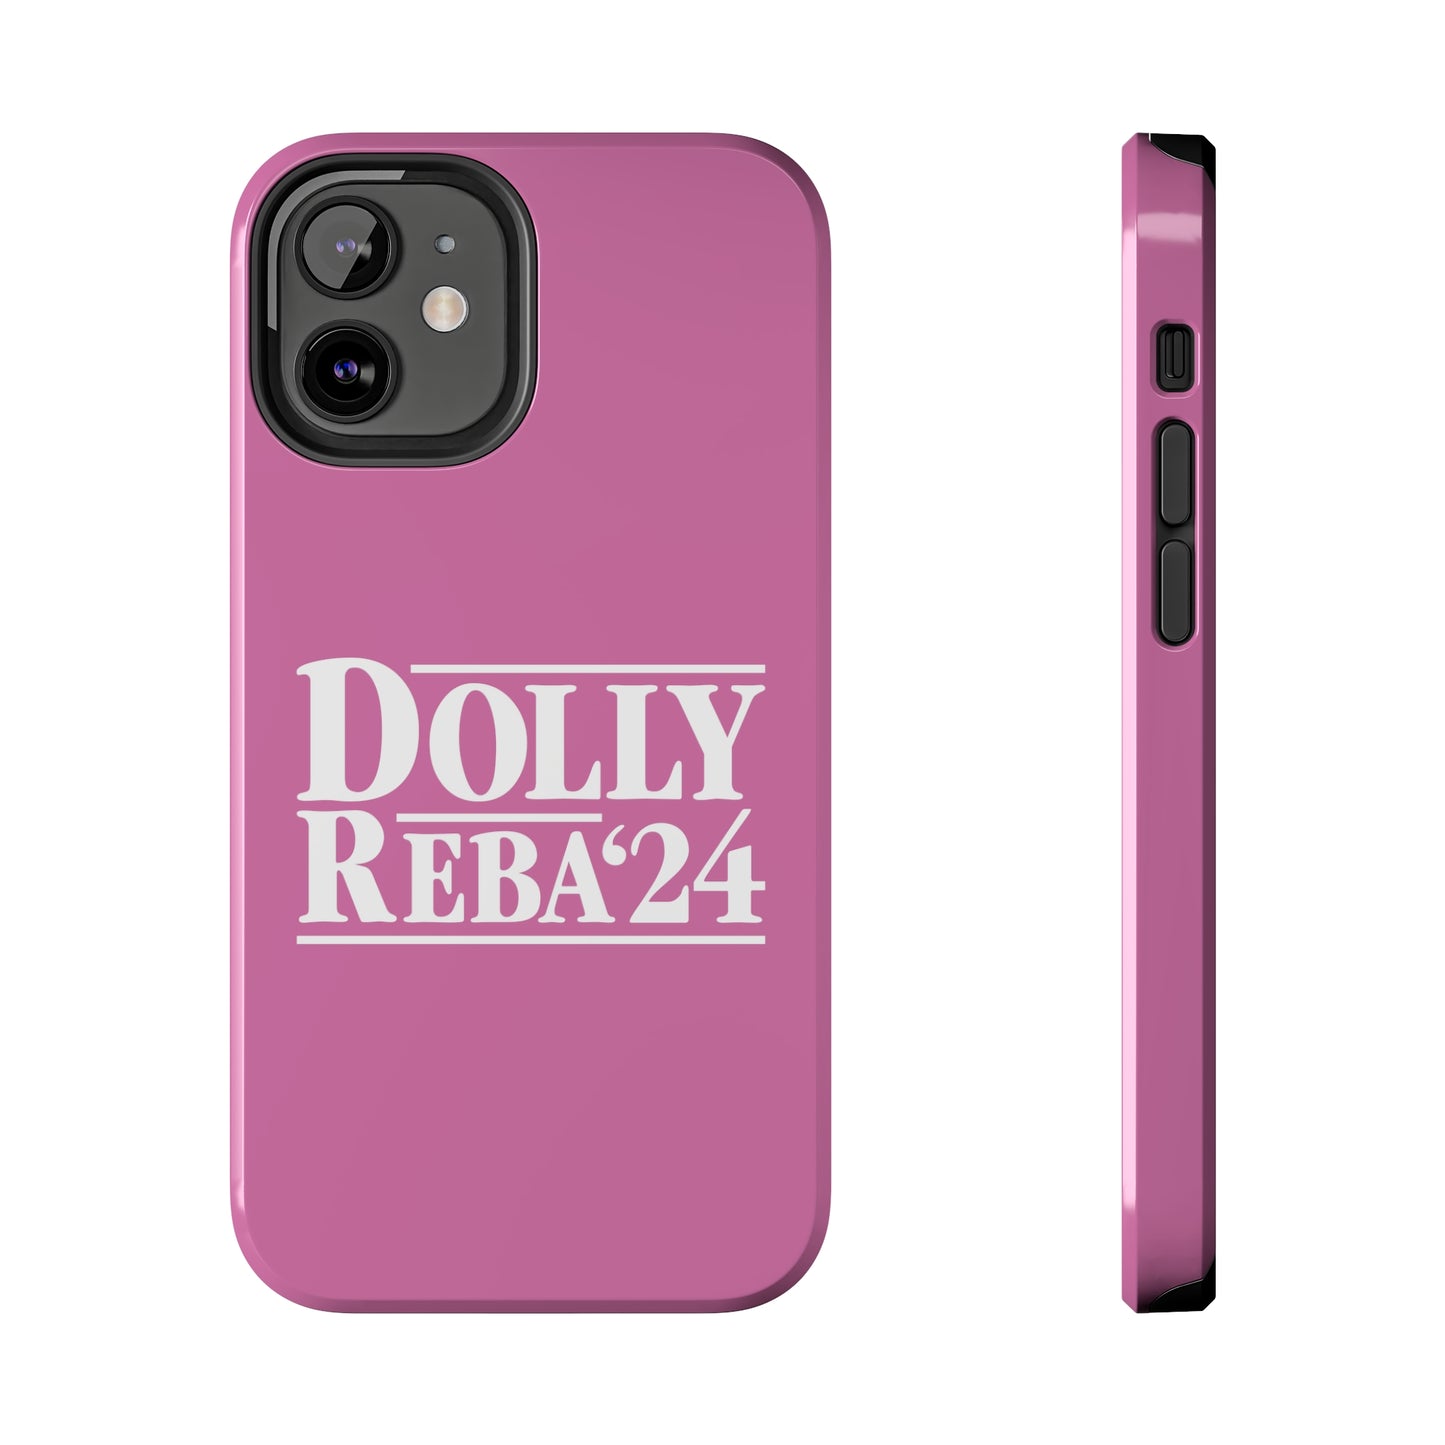 Dolly/Reba' 24 Phone Cases